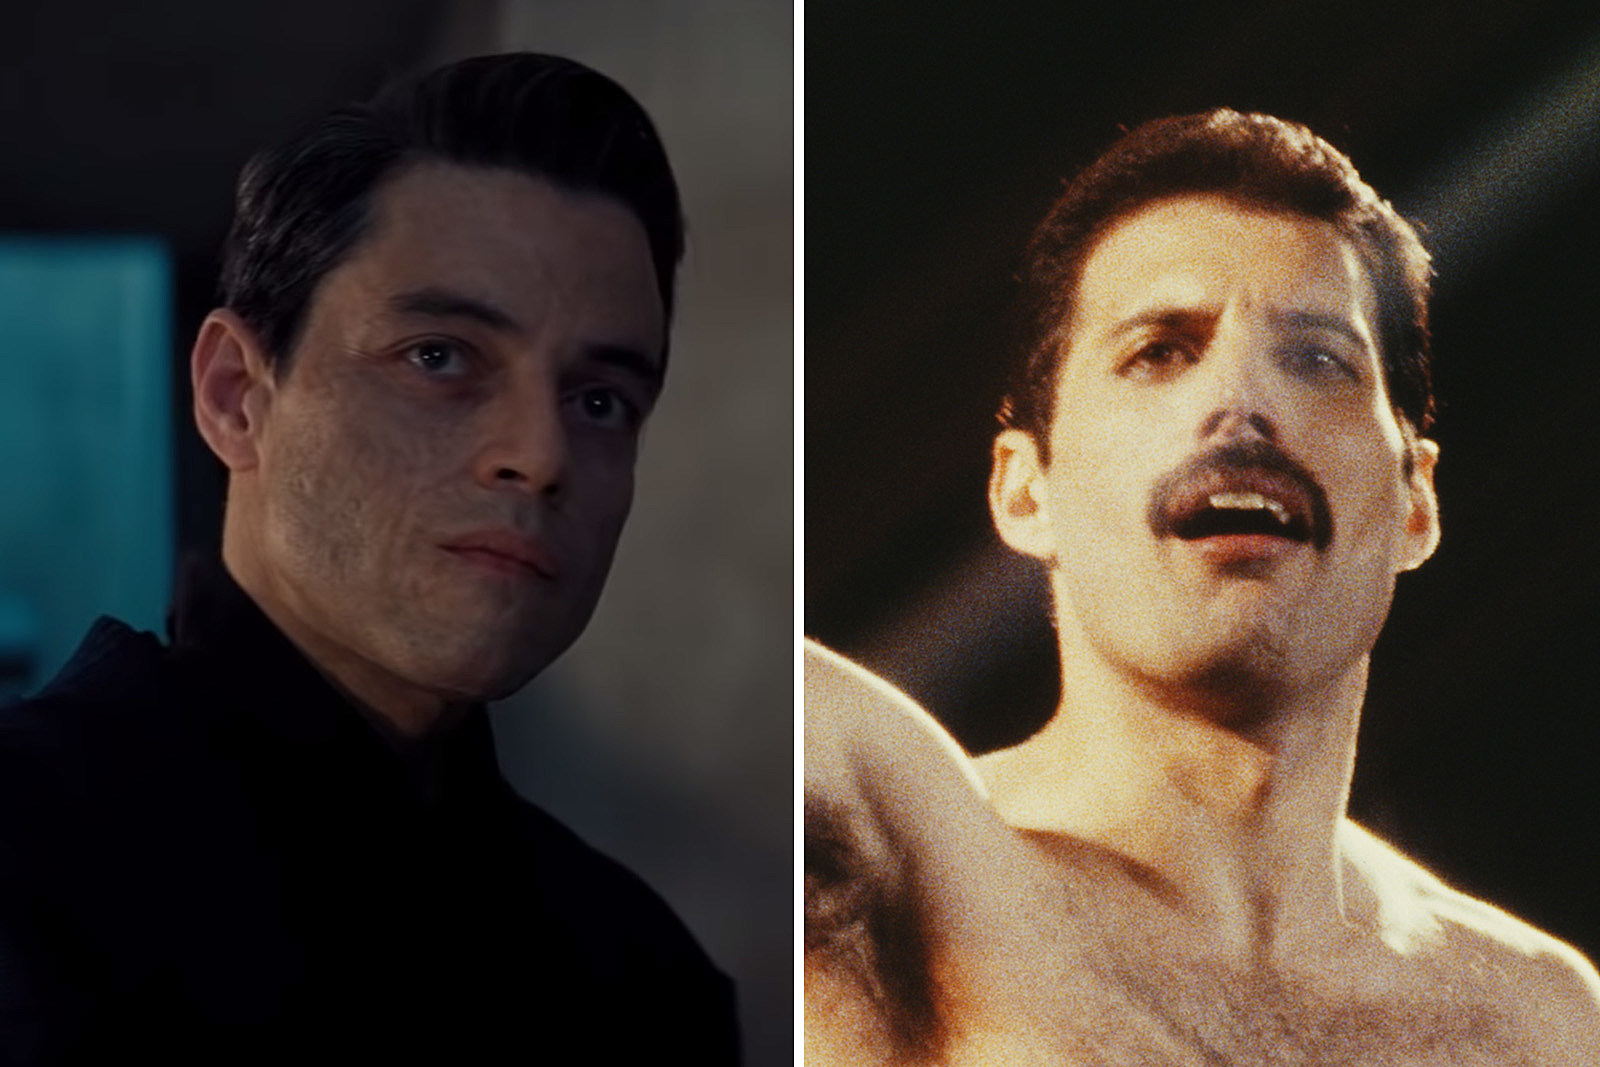 Rami Malek Inspired by Freddie Mercury For James Bond Role